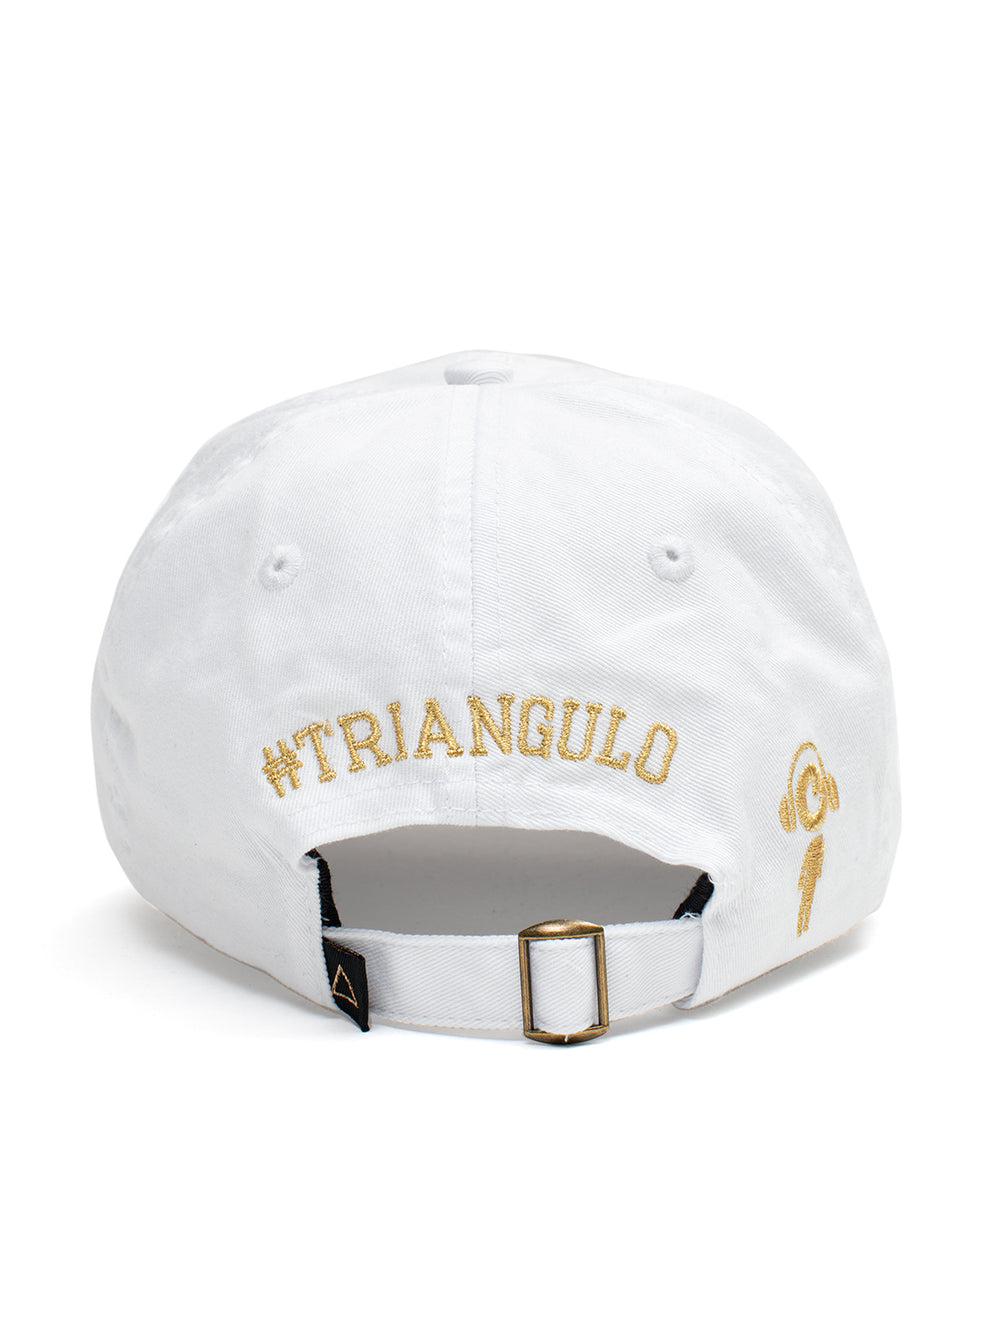 DISTRESS DAD HAT WHITE - GOLD TRI - Triangulo Swag